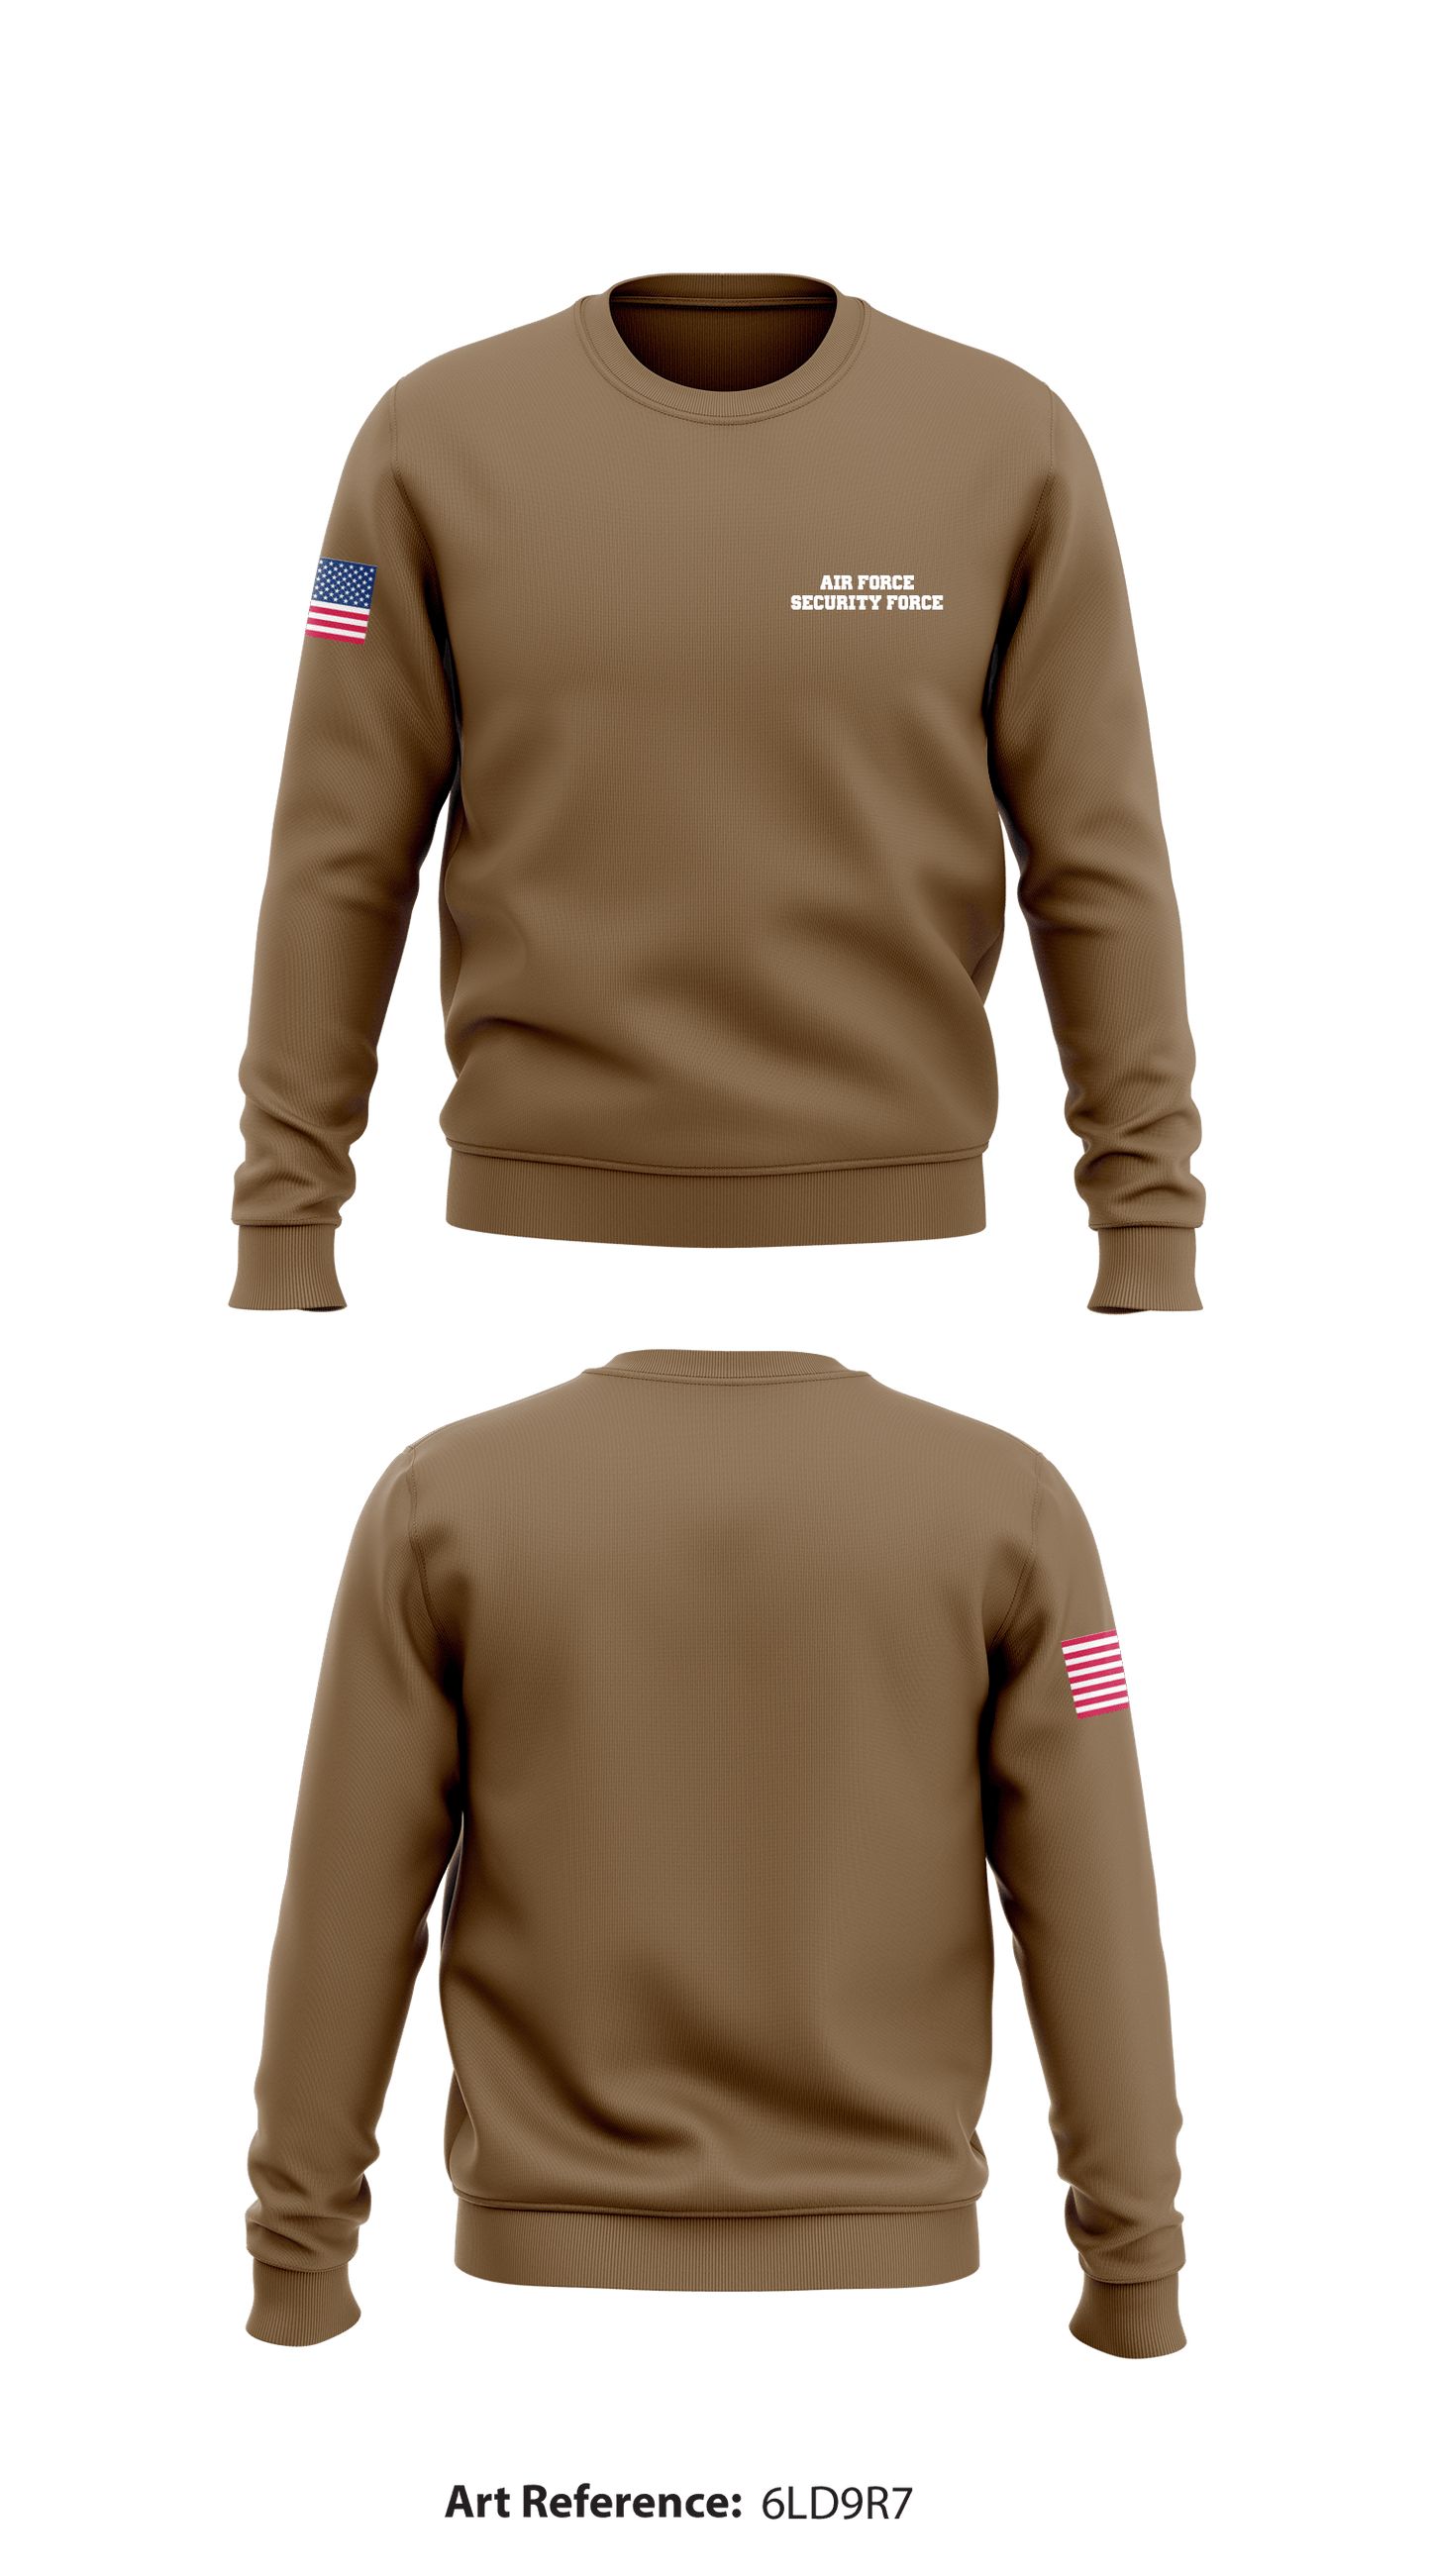 Air force security force1 Core Men's Crewneck Performance Sweatshirt - 6LD9r7